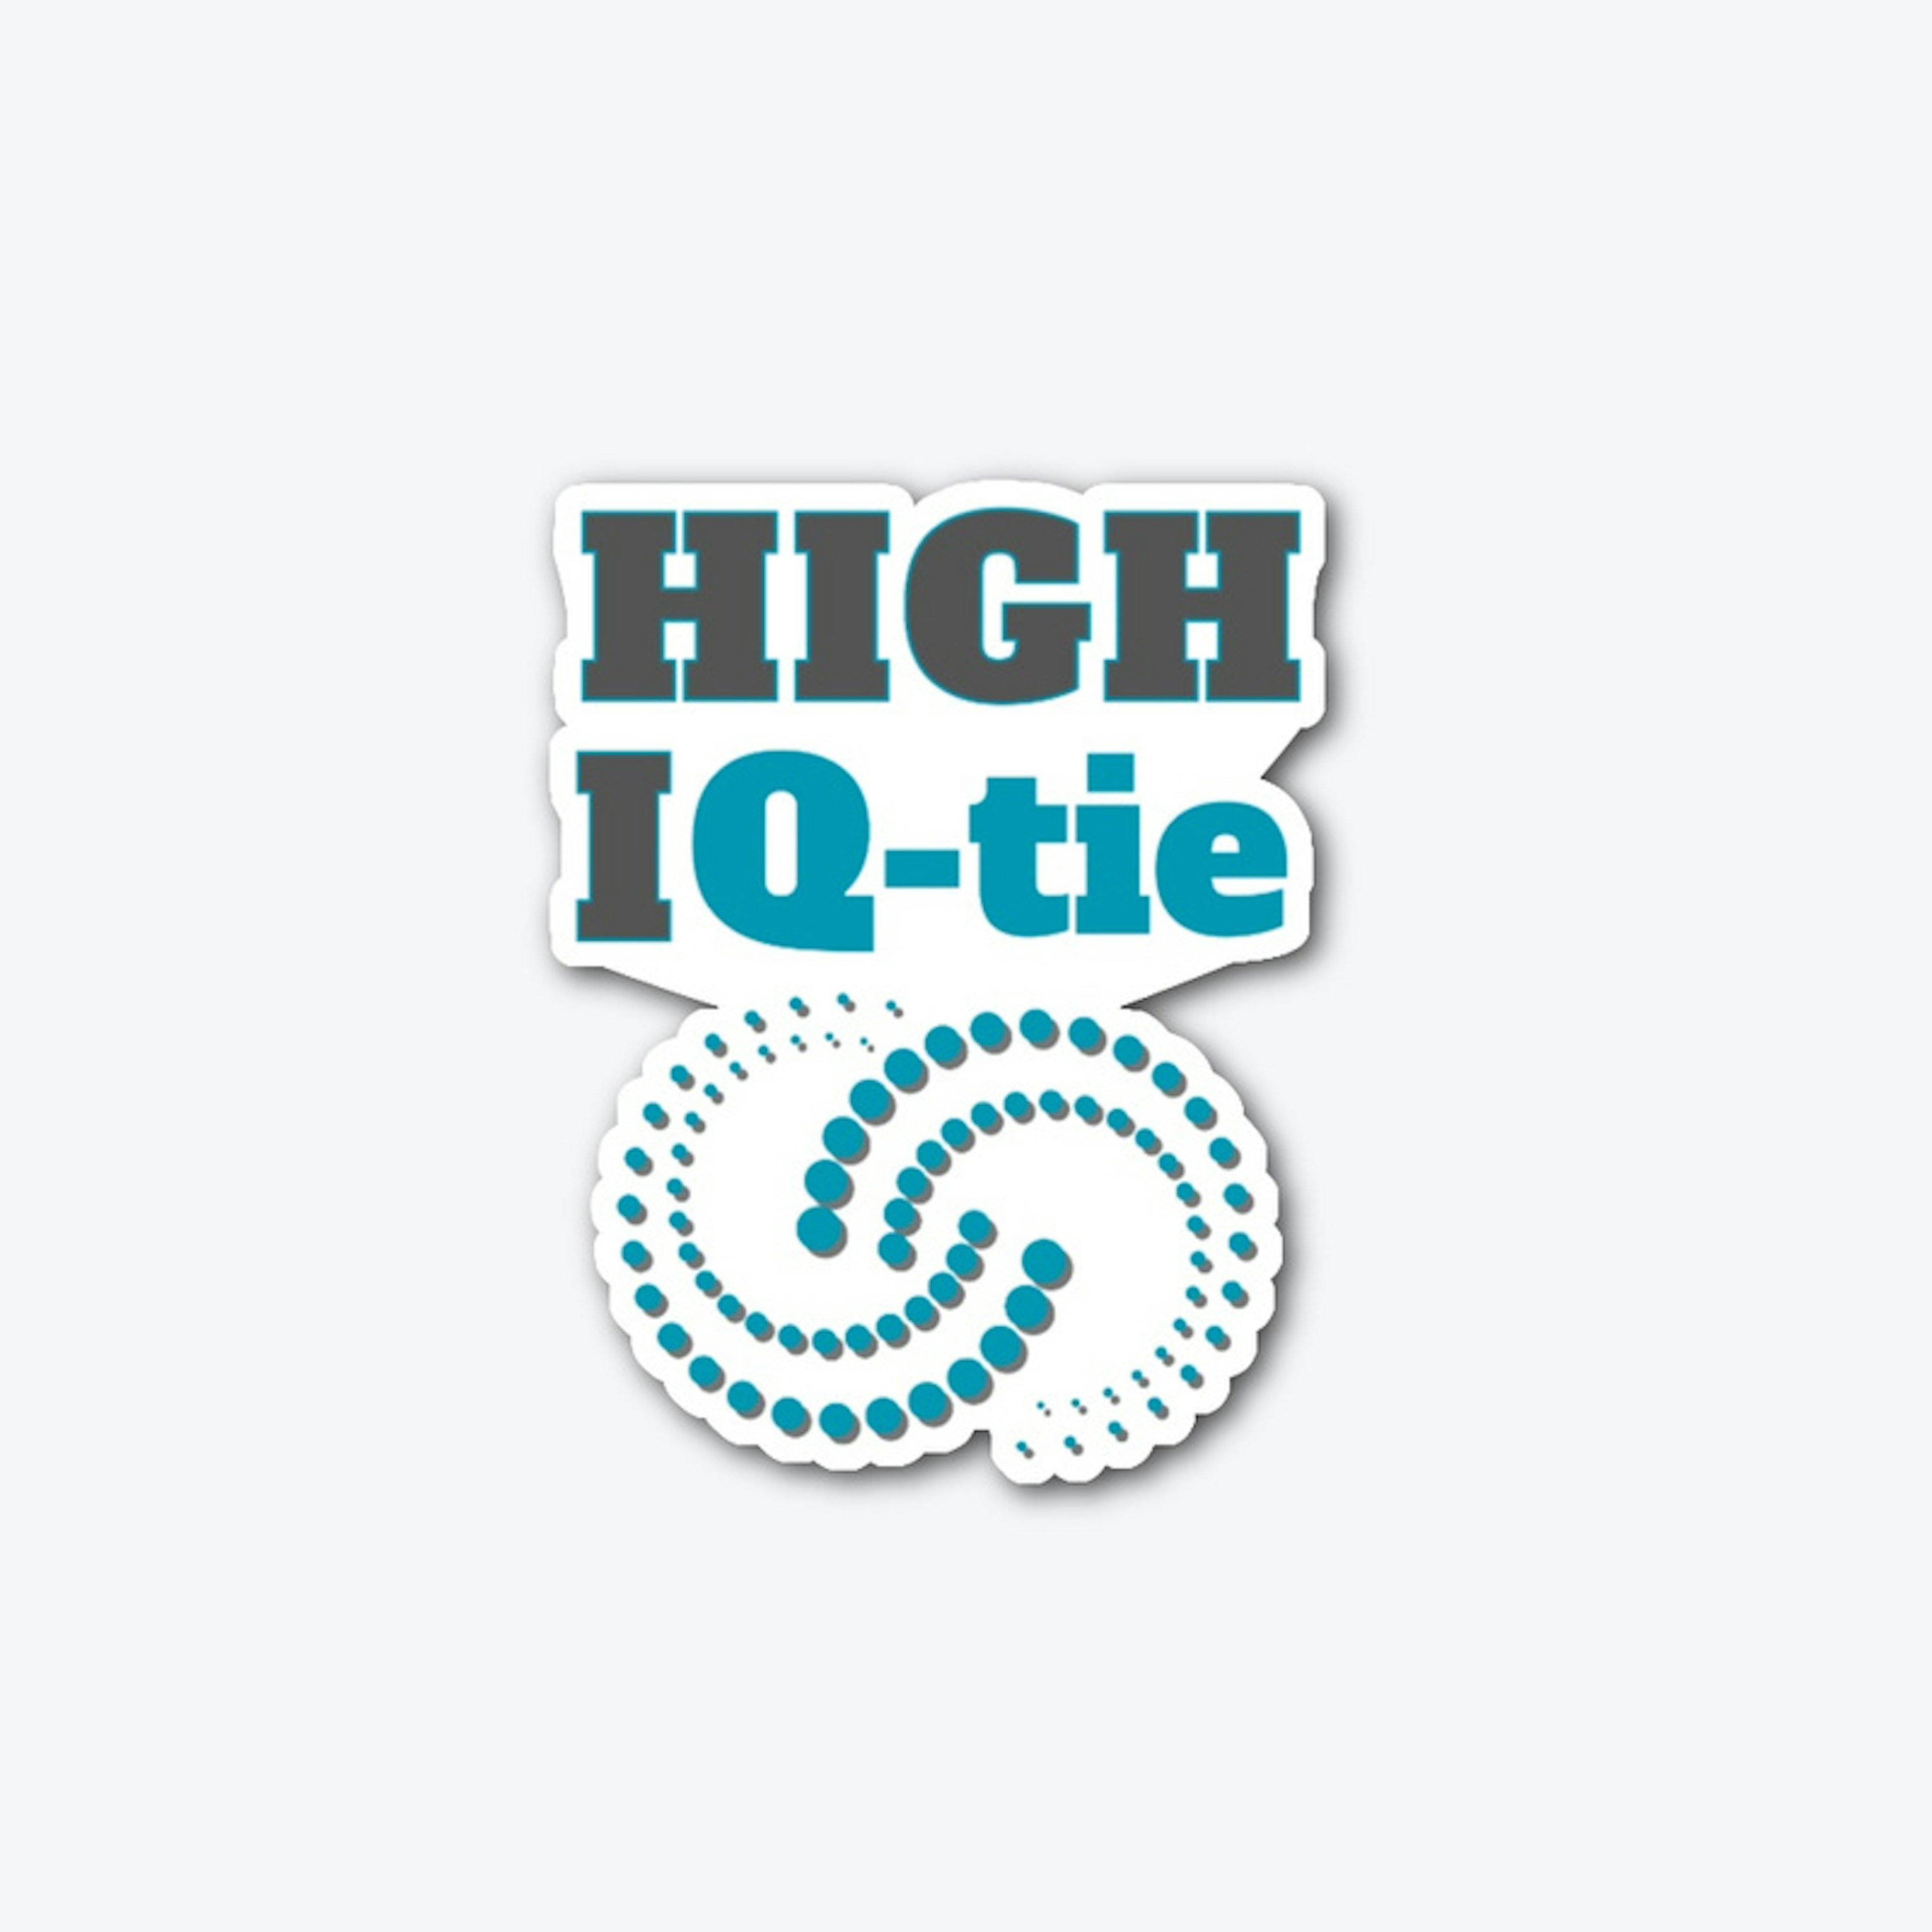 High IQ-tie 2